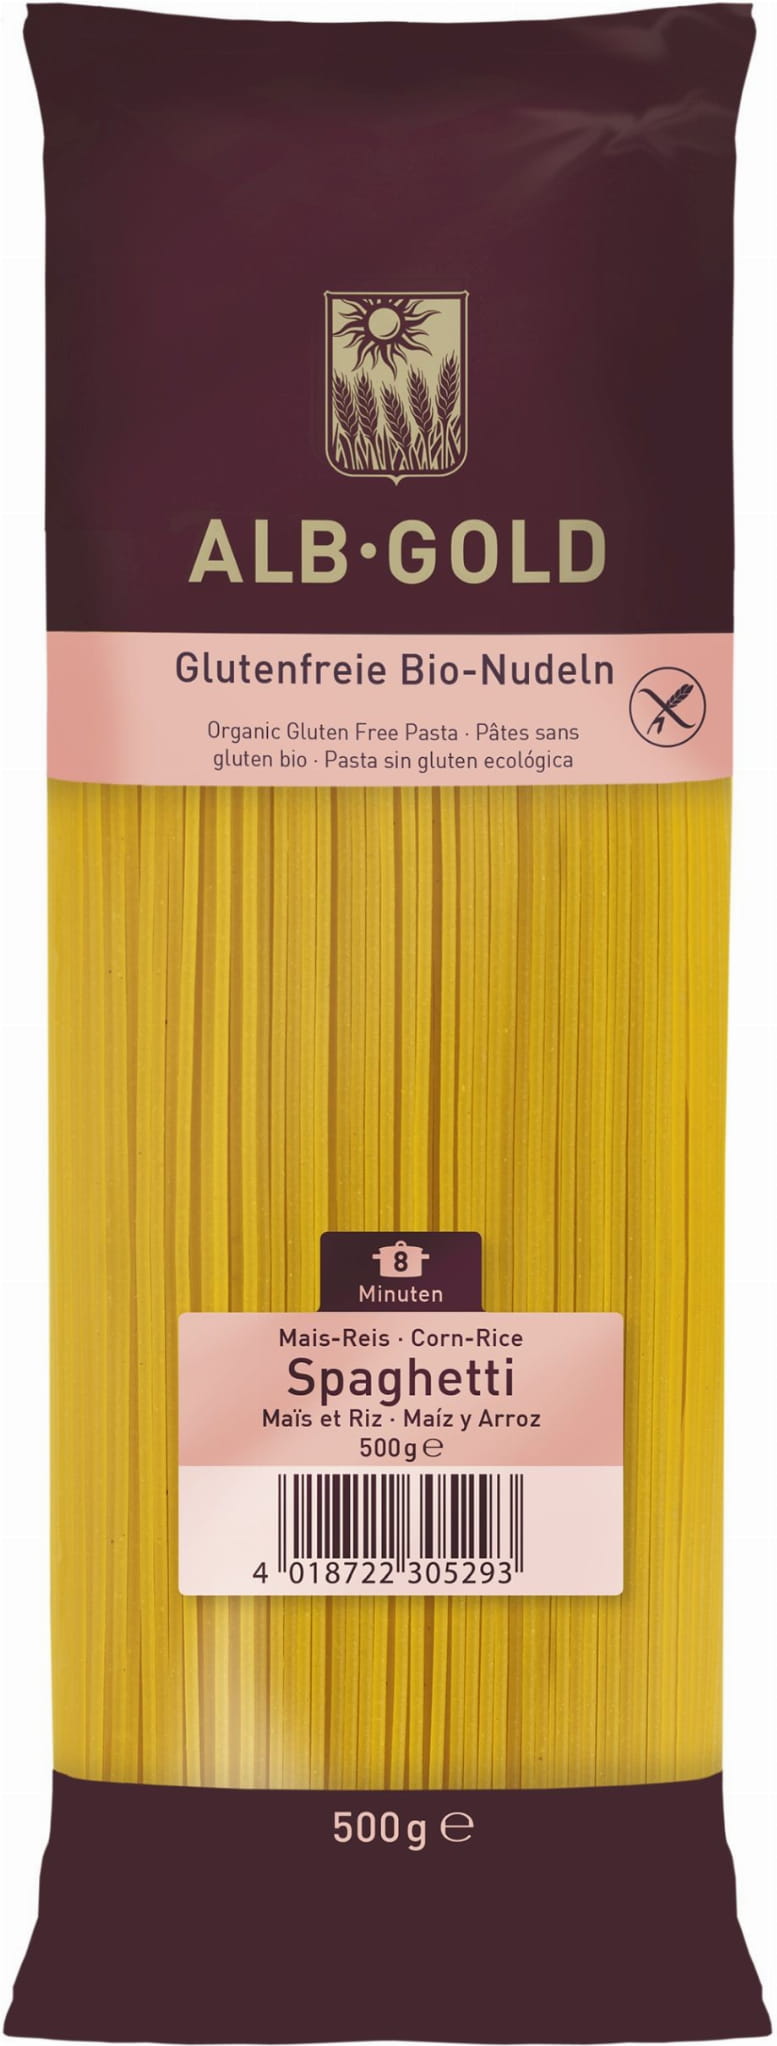 Pâtes (maïs - riz), spaghetti sans gluten BIO 500 g - ALB GOLD